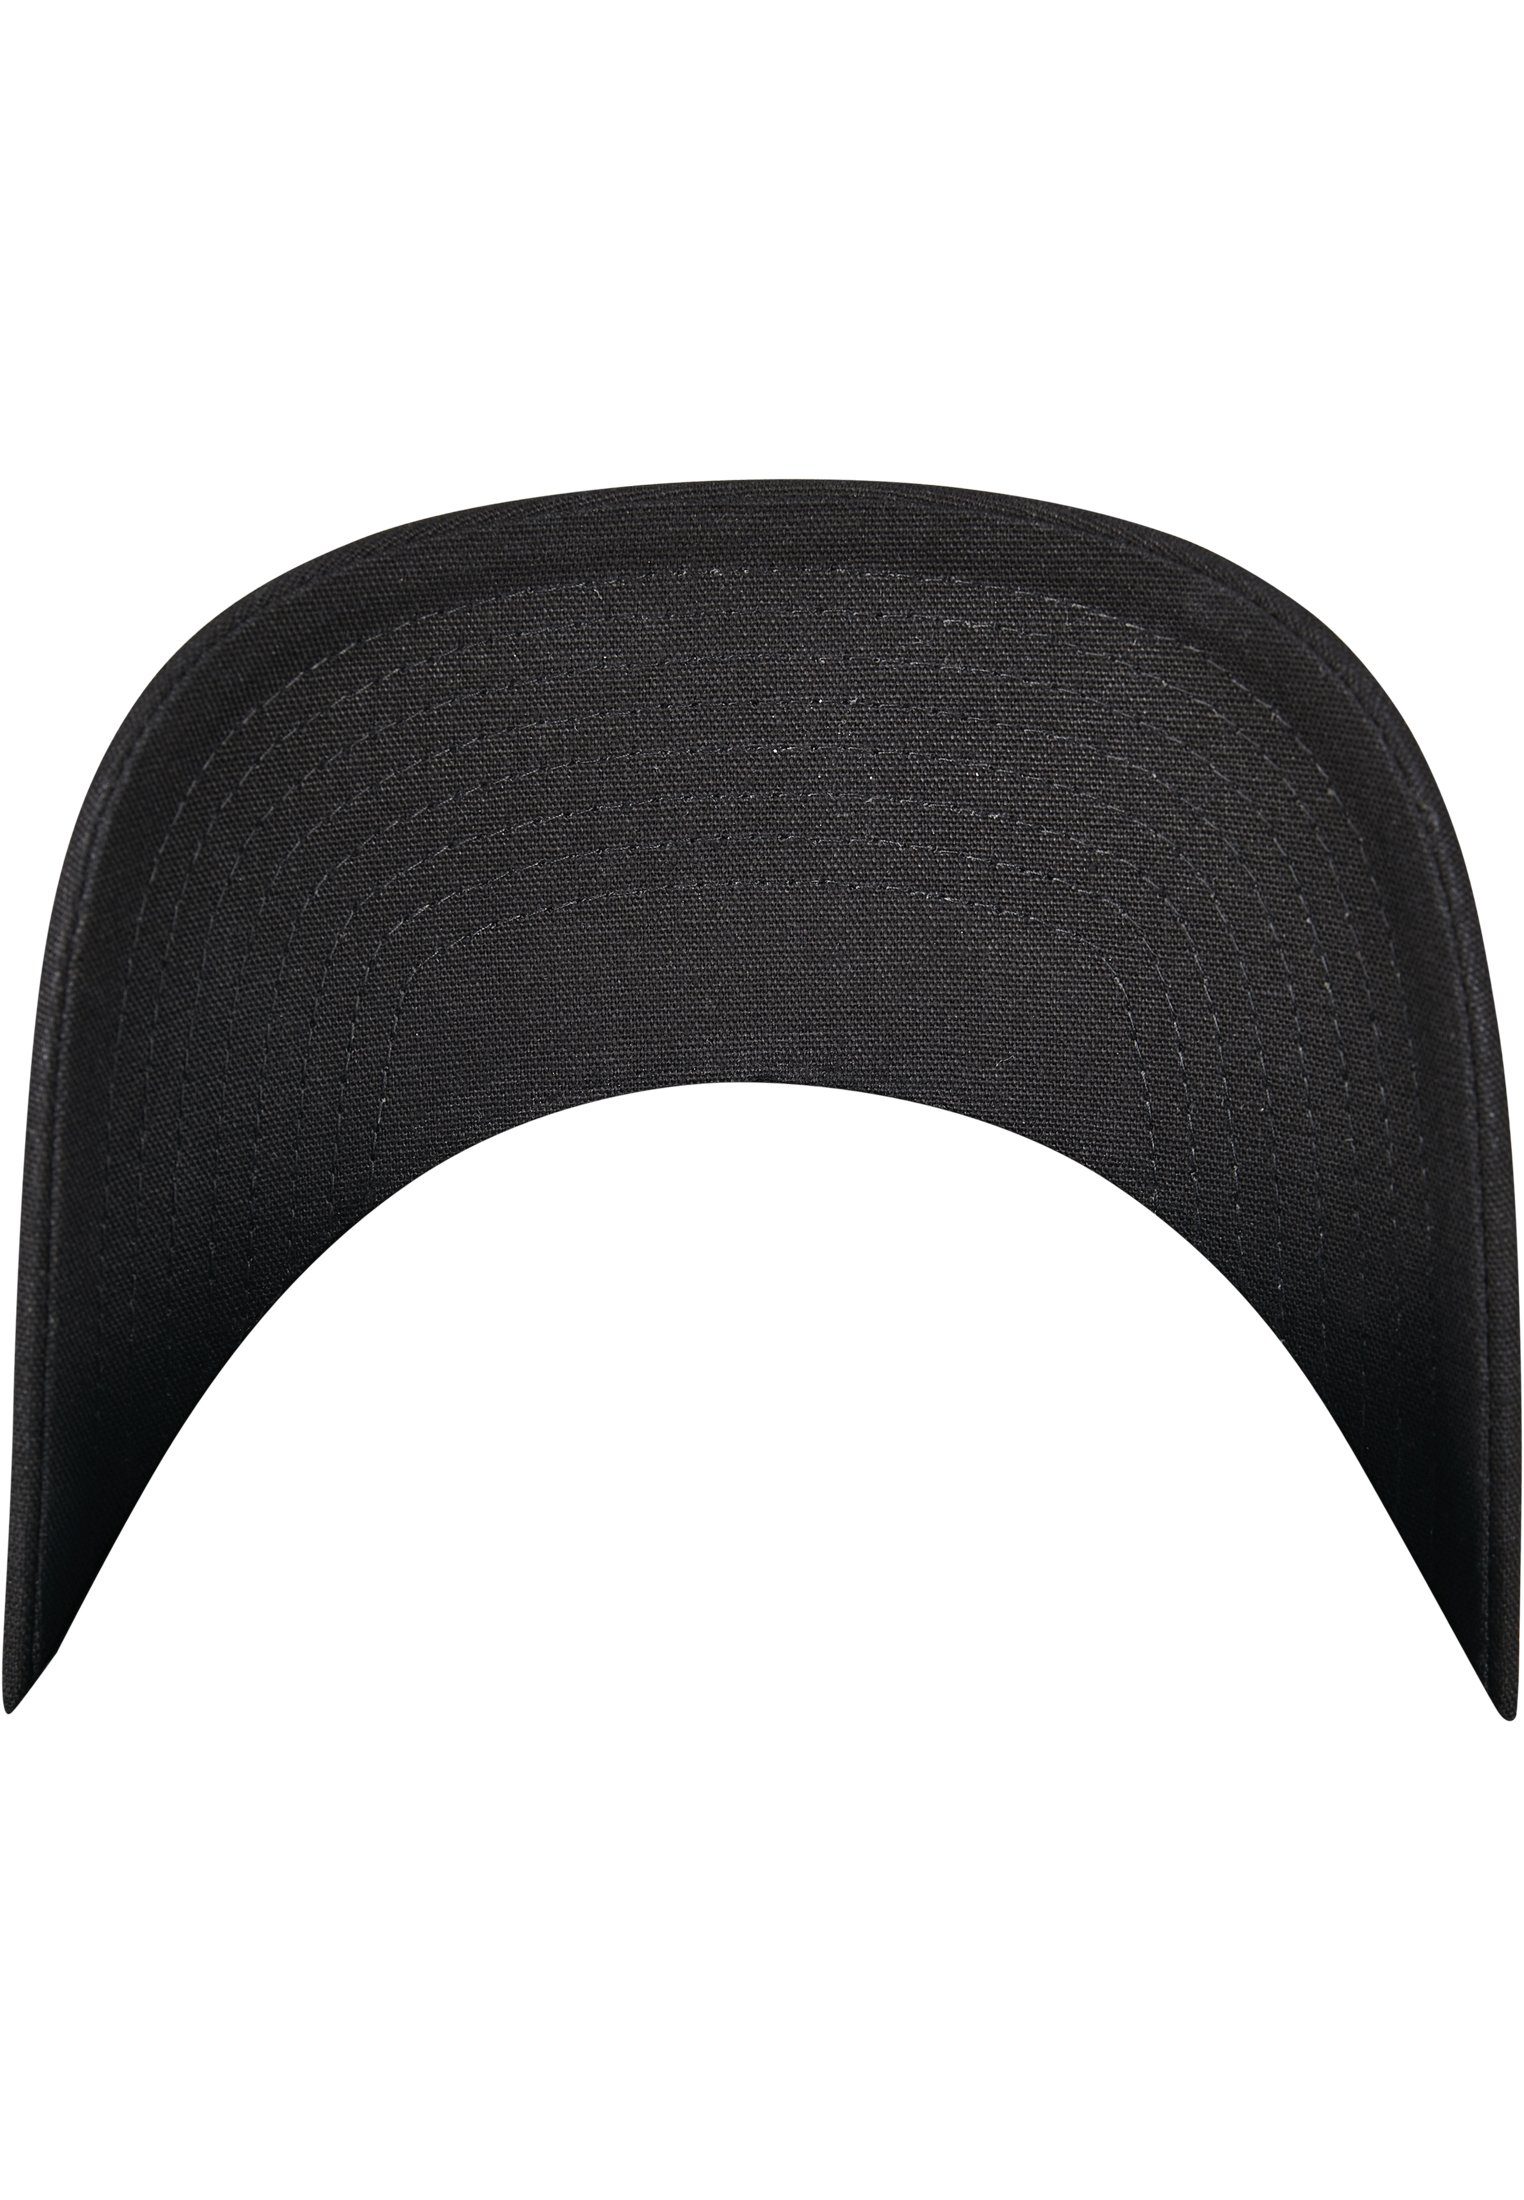 Flex Snap Metal 6-Panel Cap Snapback black Flexfit Curved